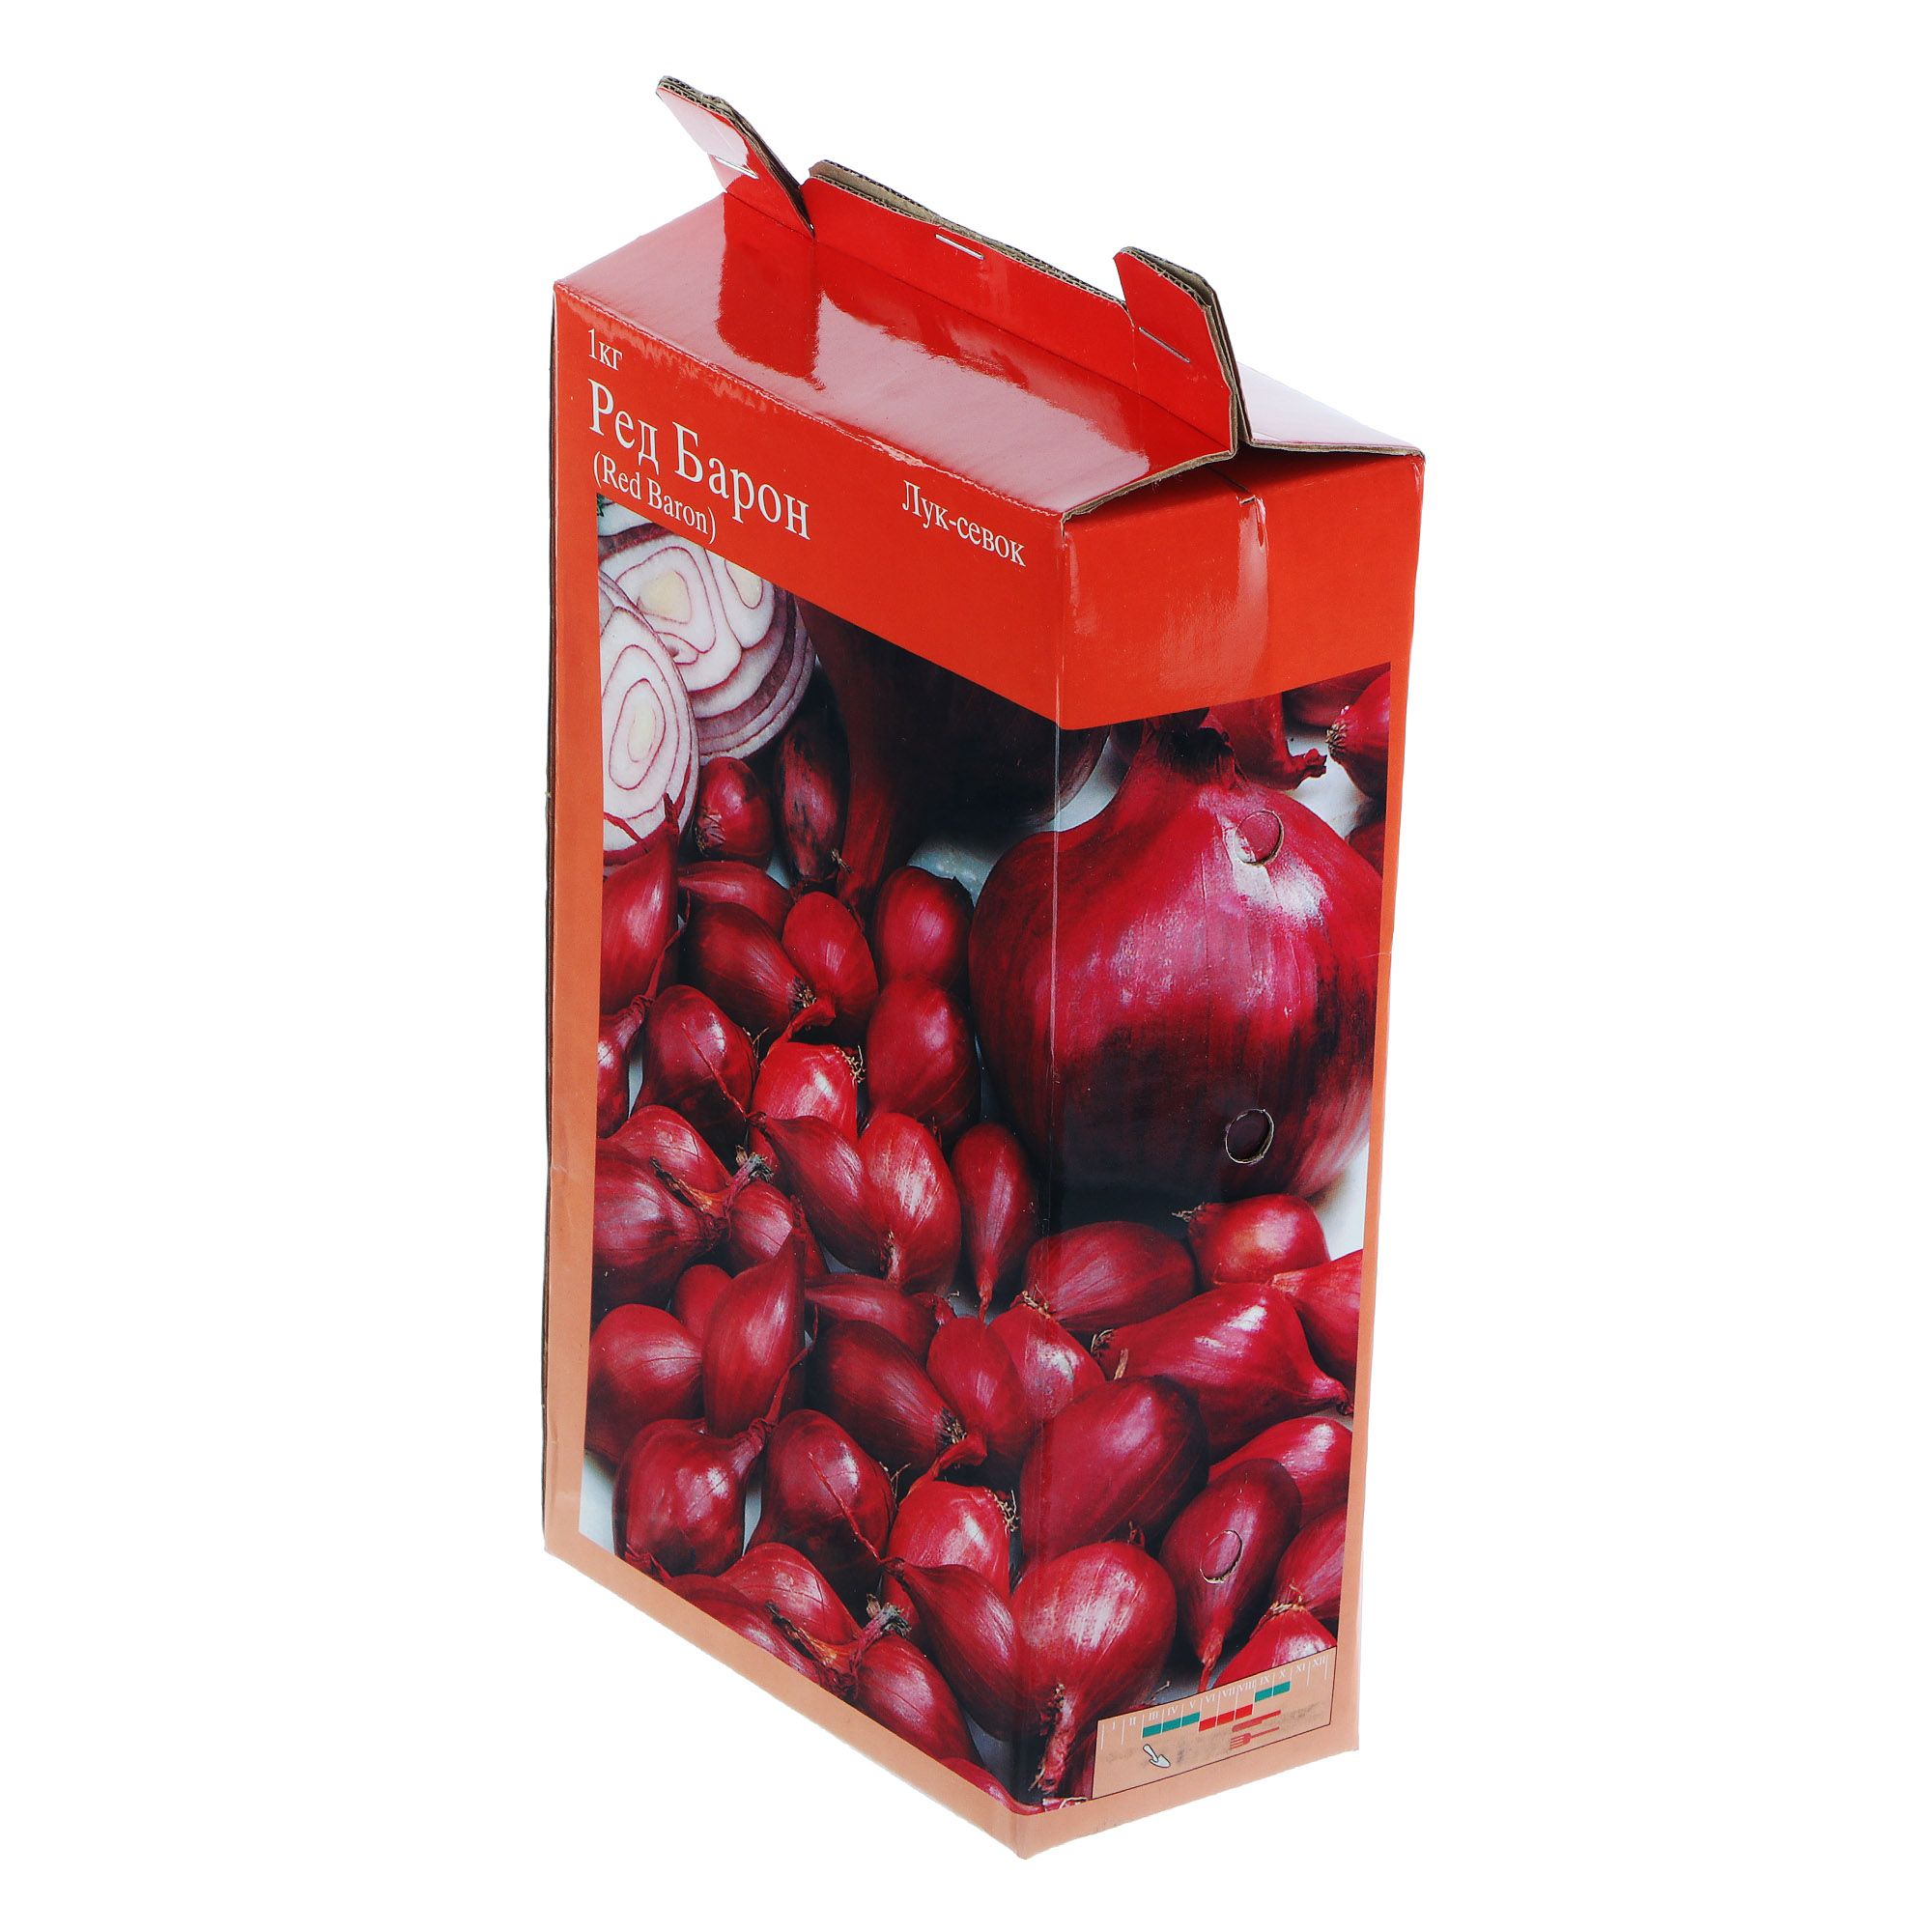 Лук-севок Simple pleasures red baron 1кг в коробке лилии азиатские ред хайленд луковица 16 18